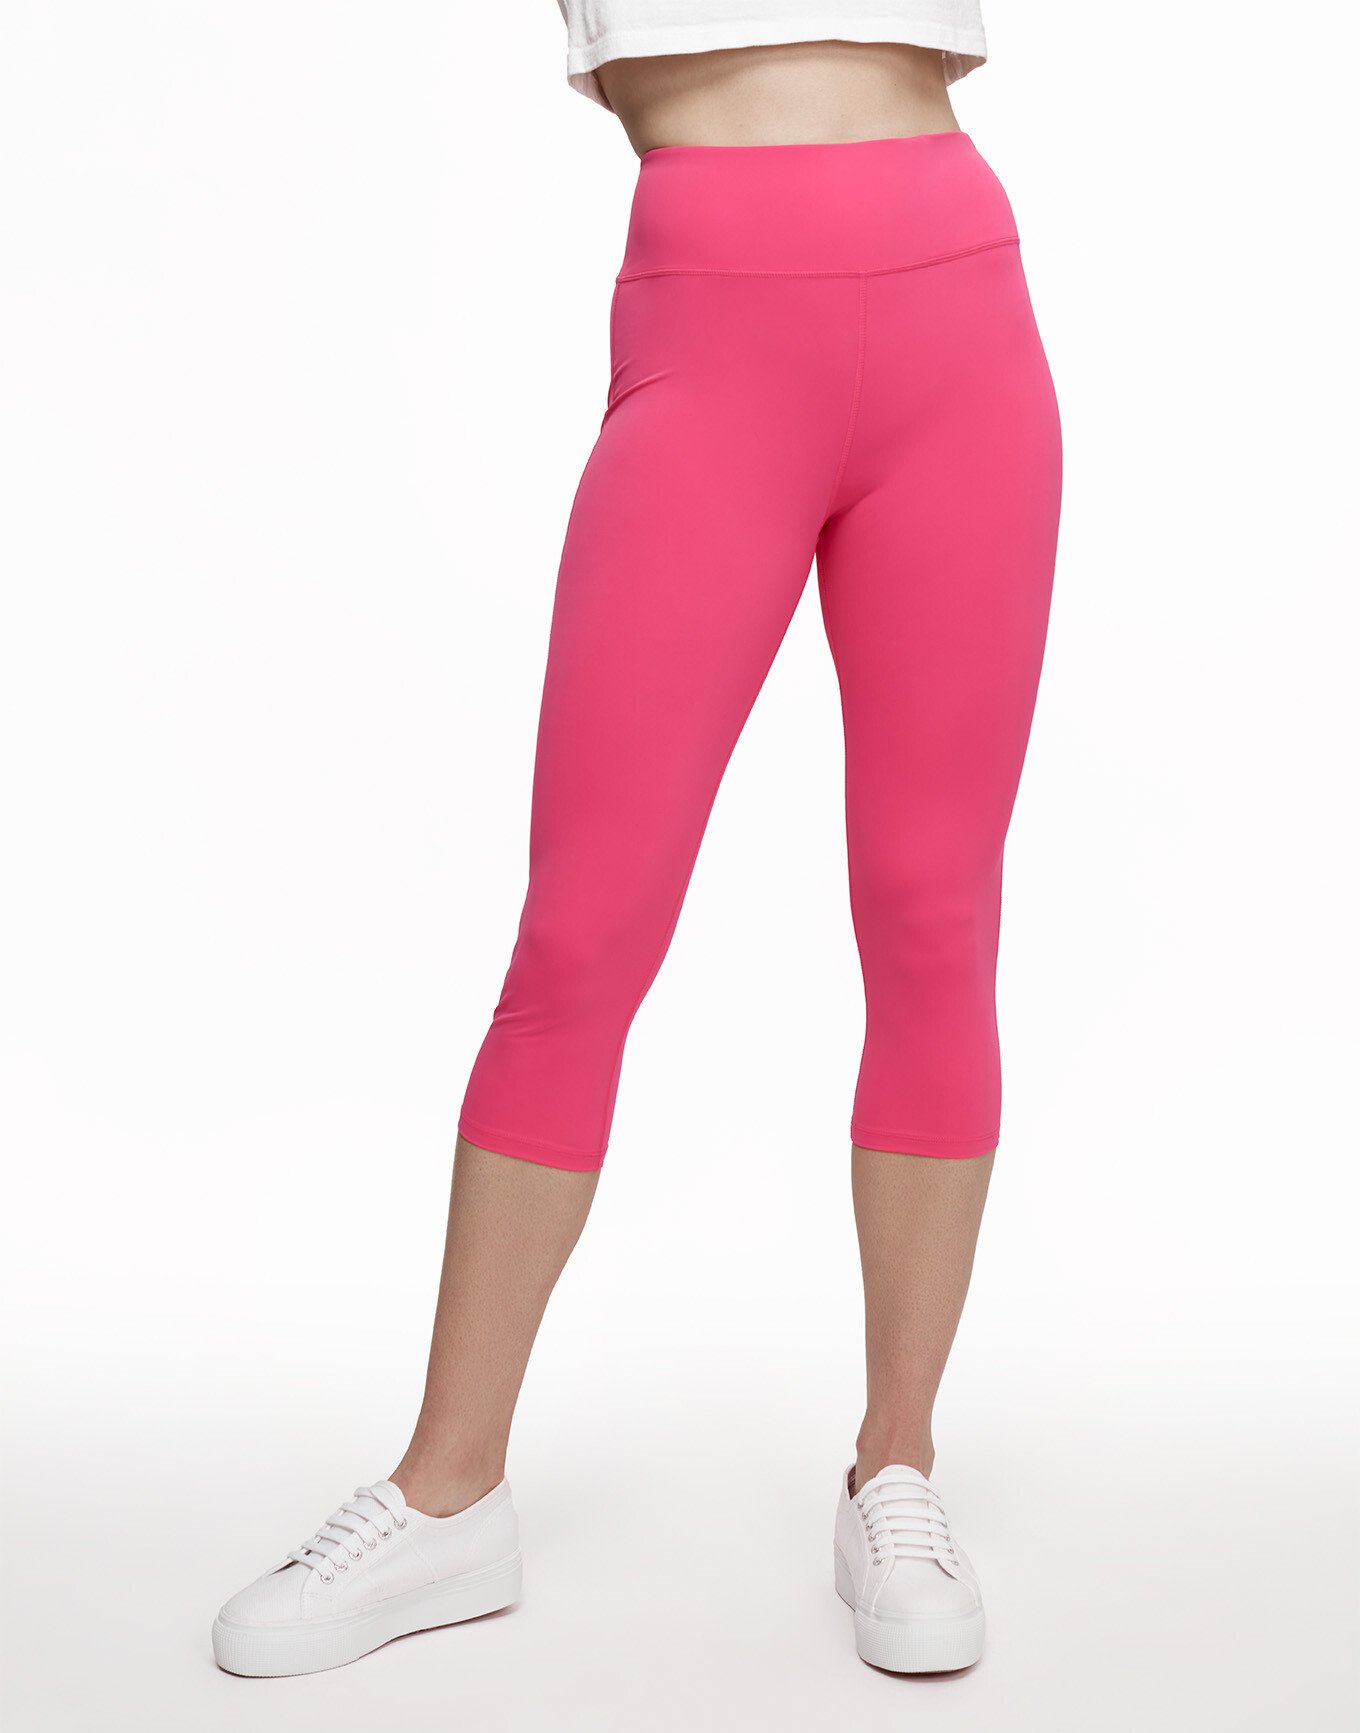 Women's Compression Leggings W/ Pockets - Pink